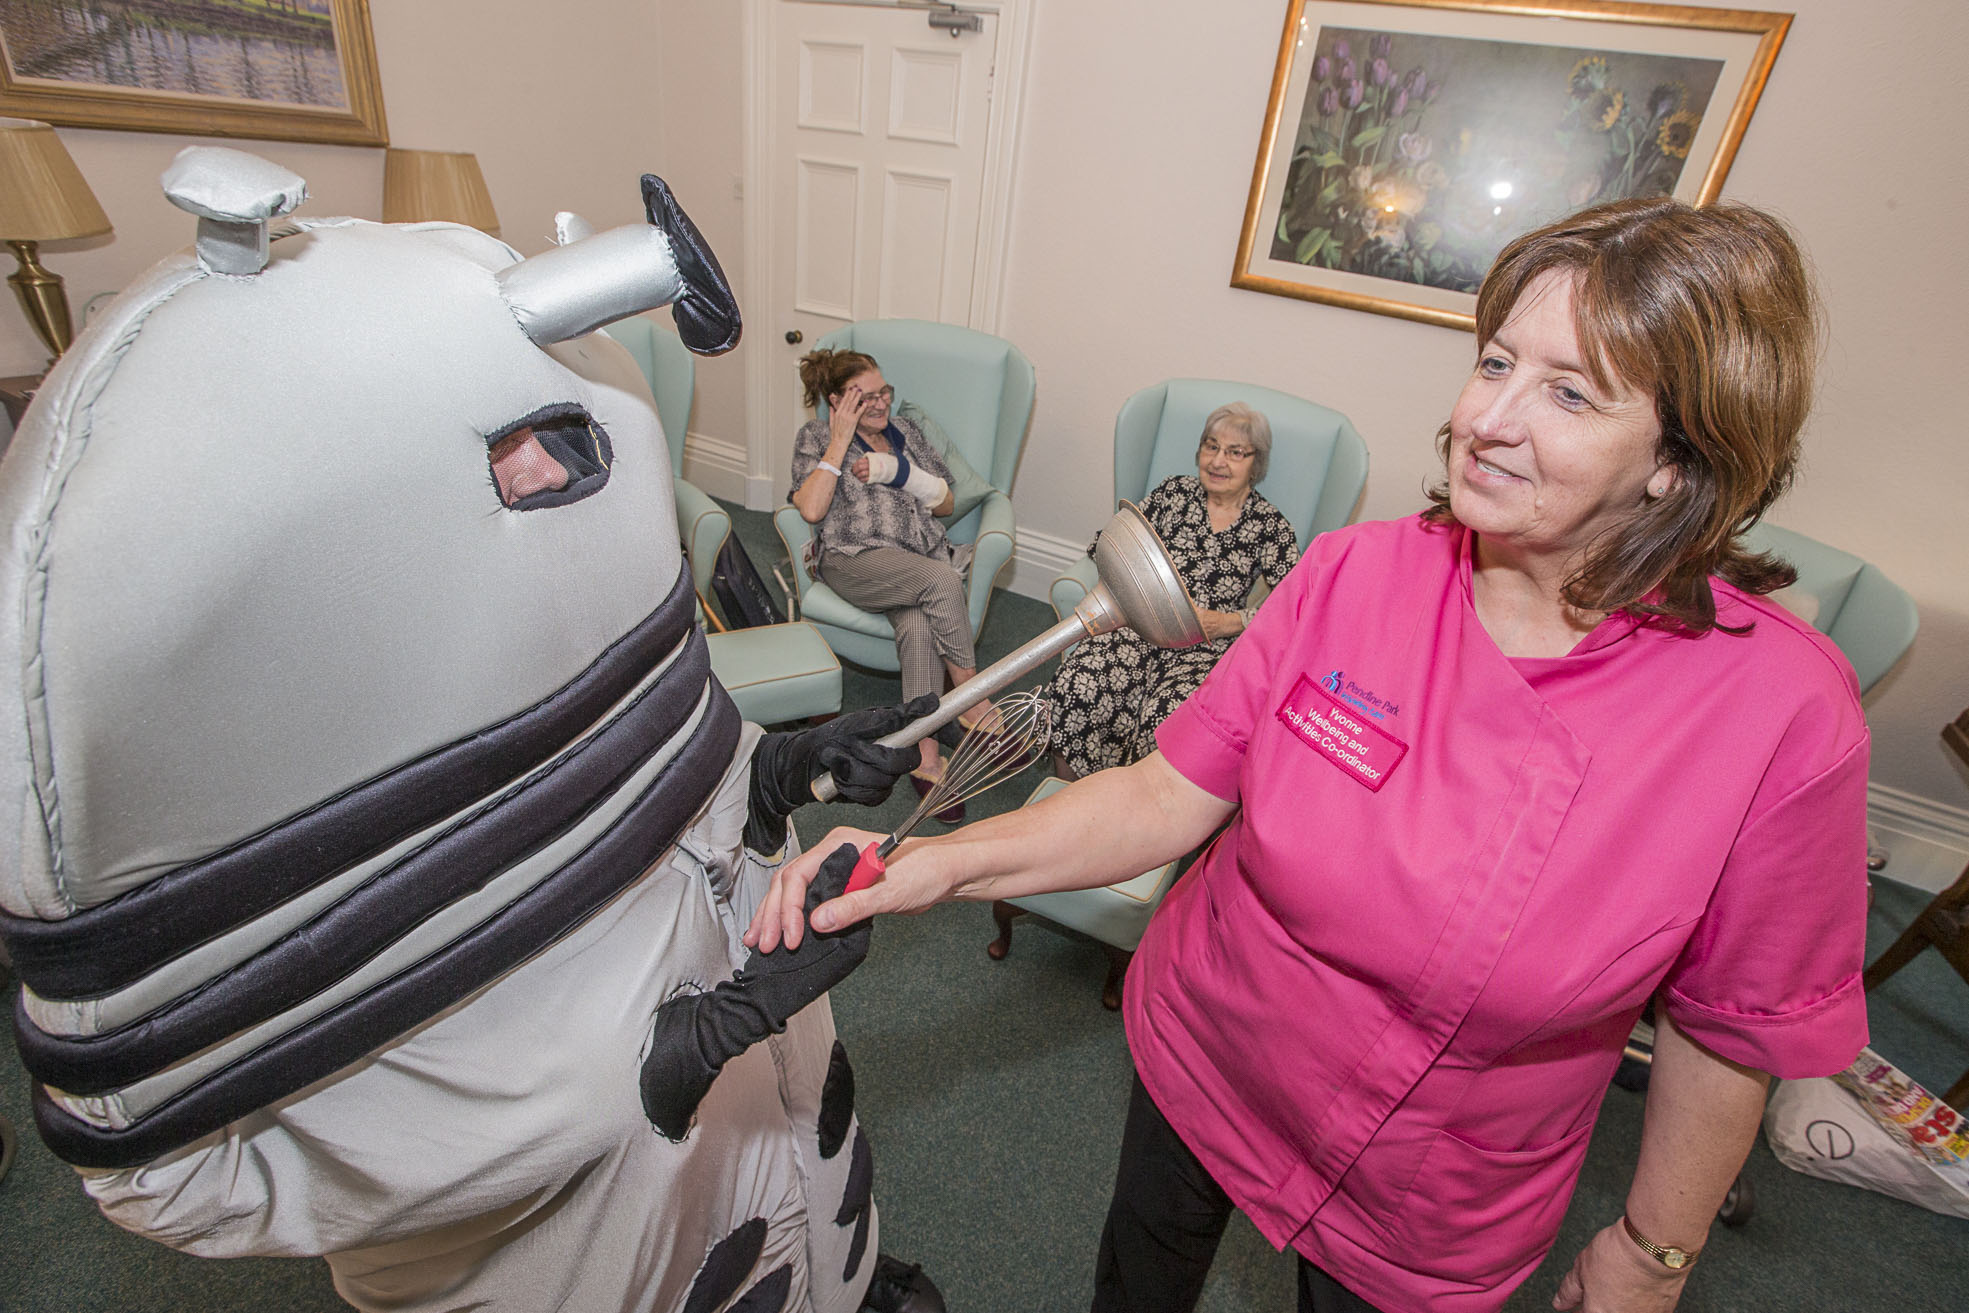 Dalek invades Wrexham care home for performance